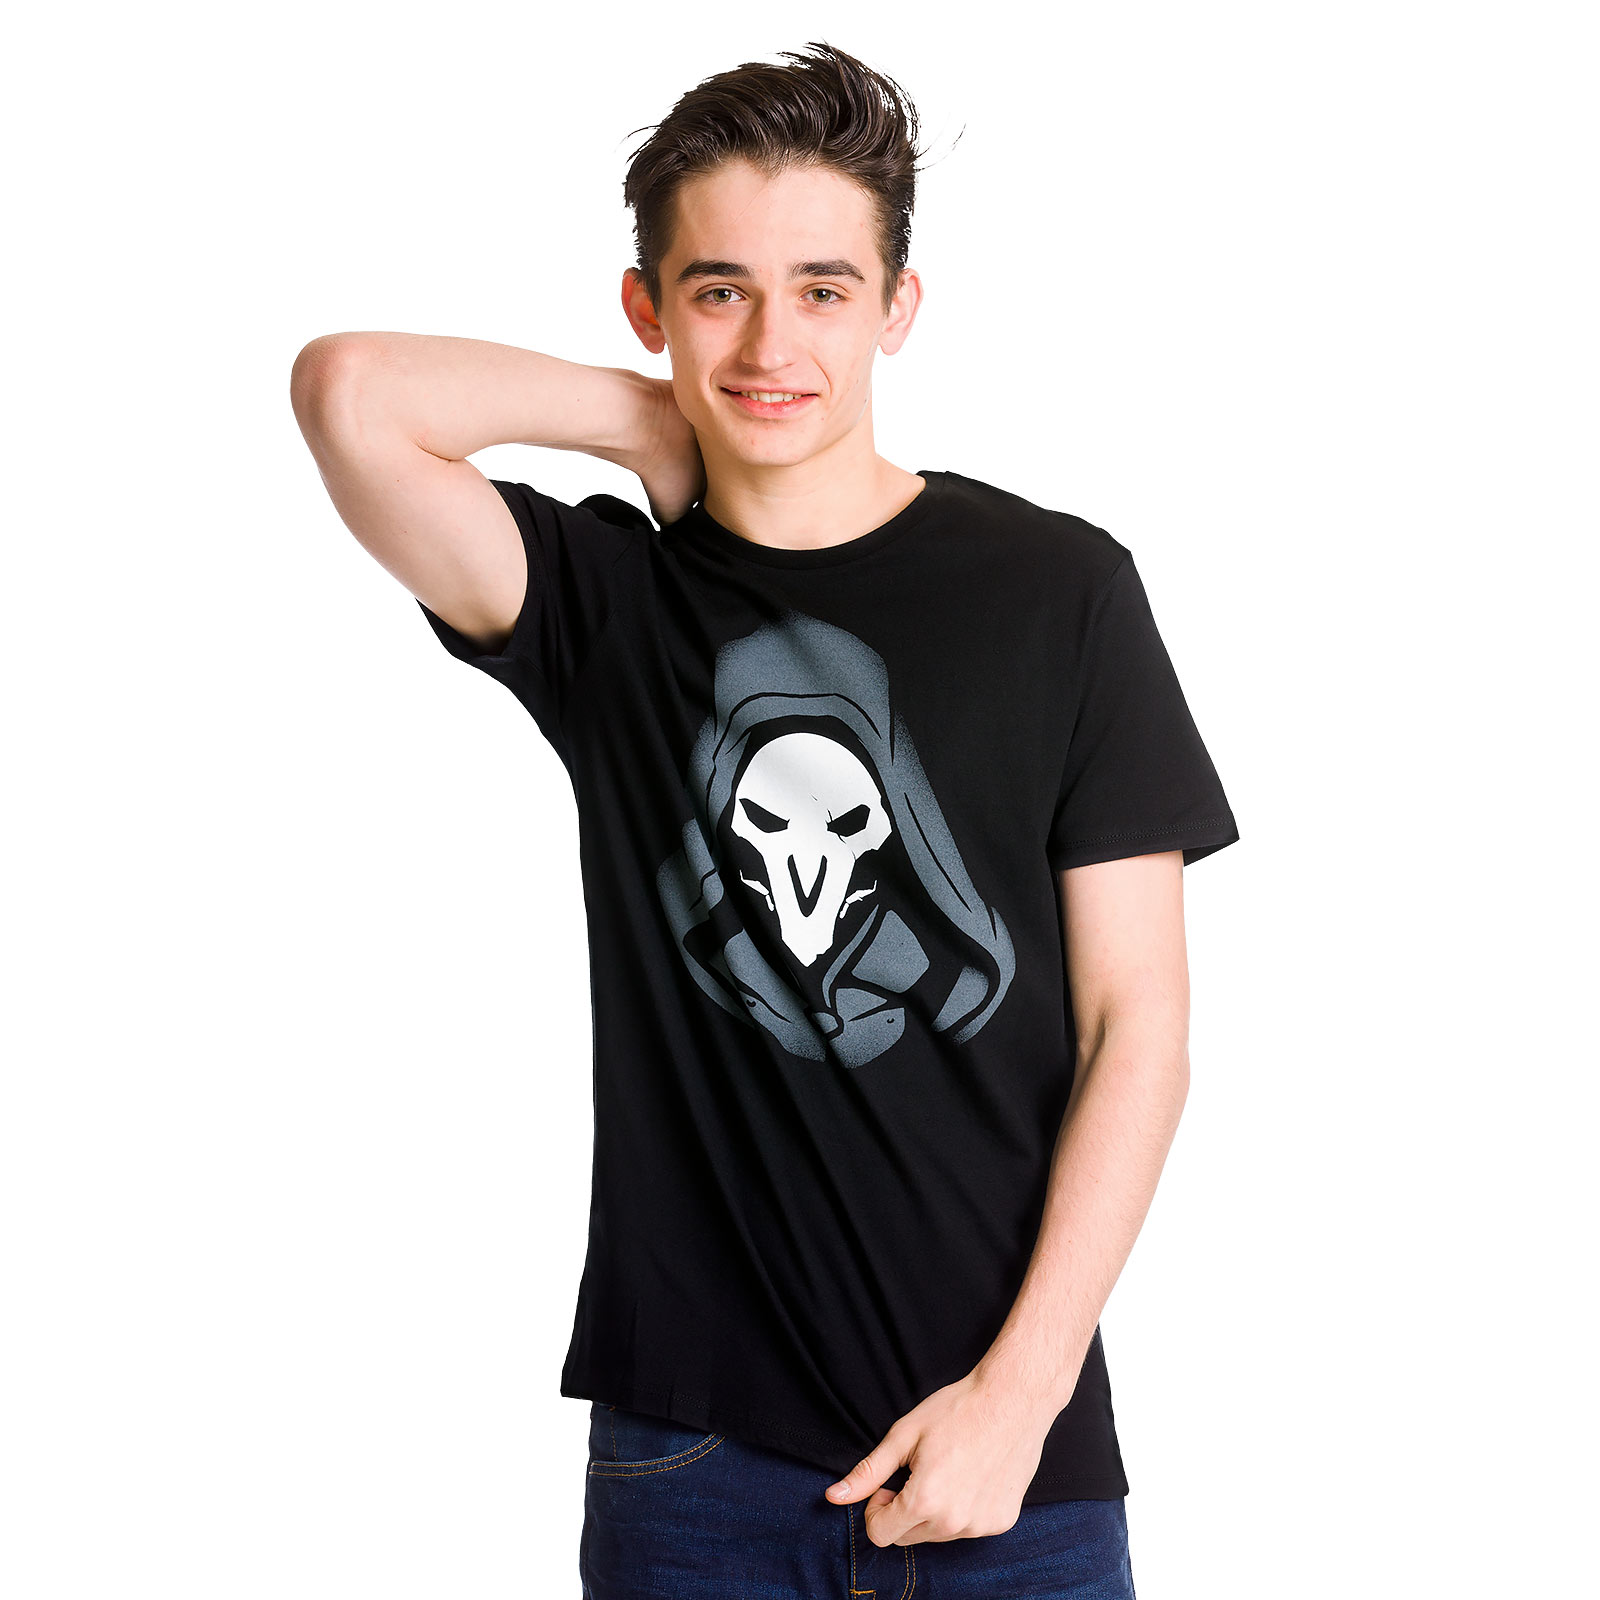 Overwatch - Reaper T-Shirt schwarz